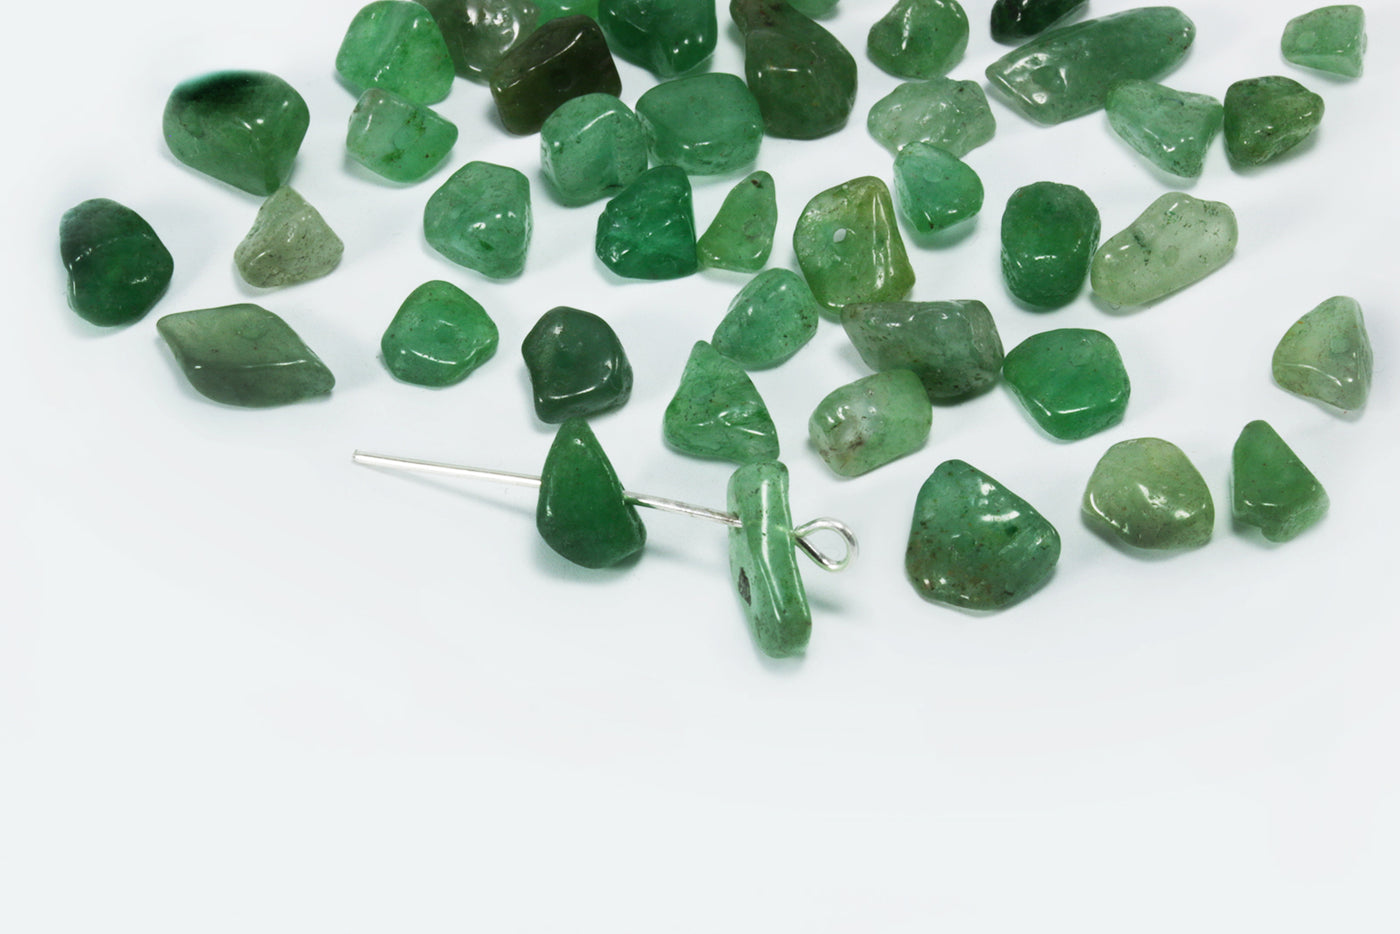 Edelstein Perlen, Aventurin grün, 5-8 mm, 50 Stück